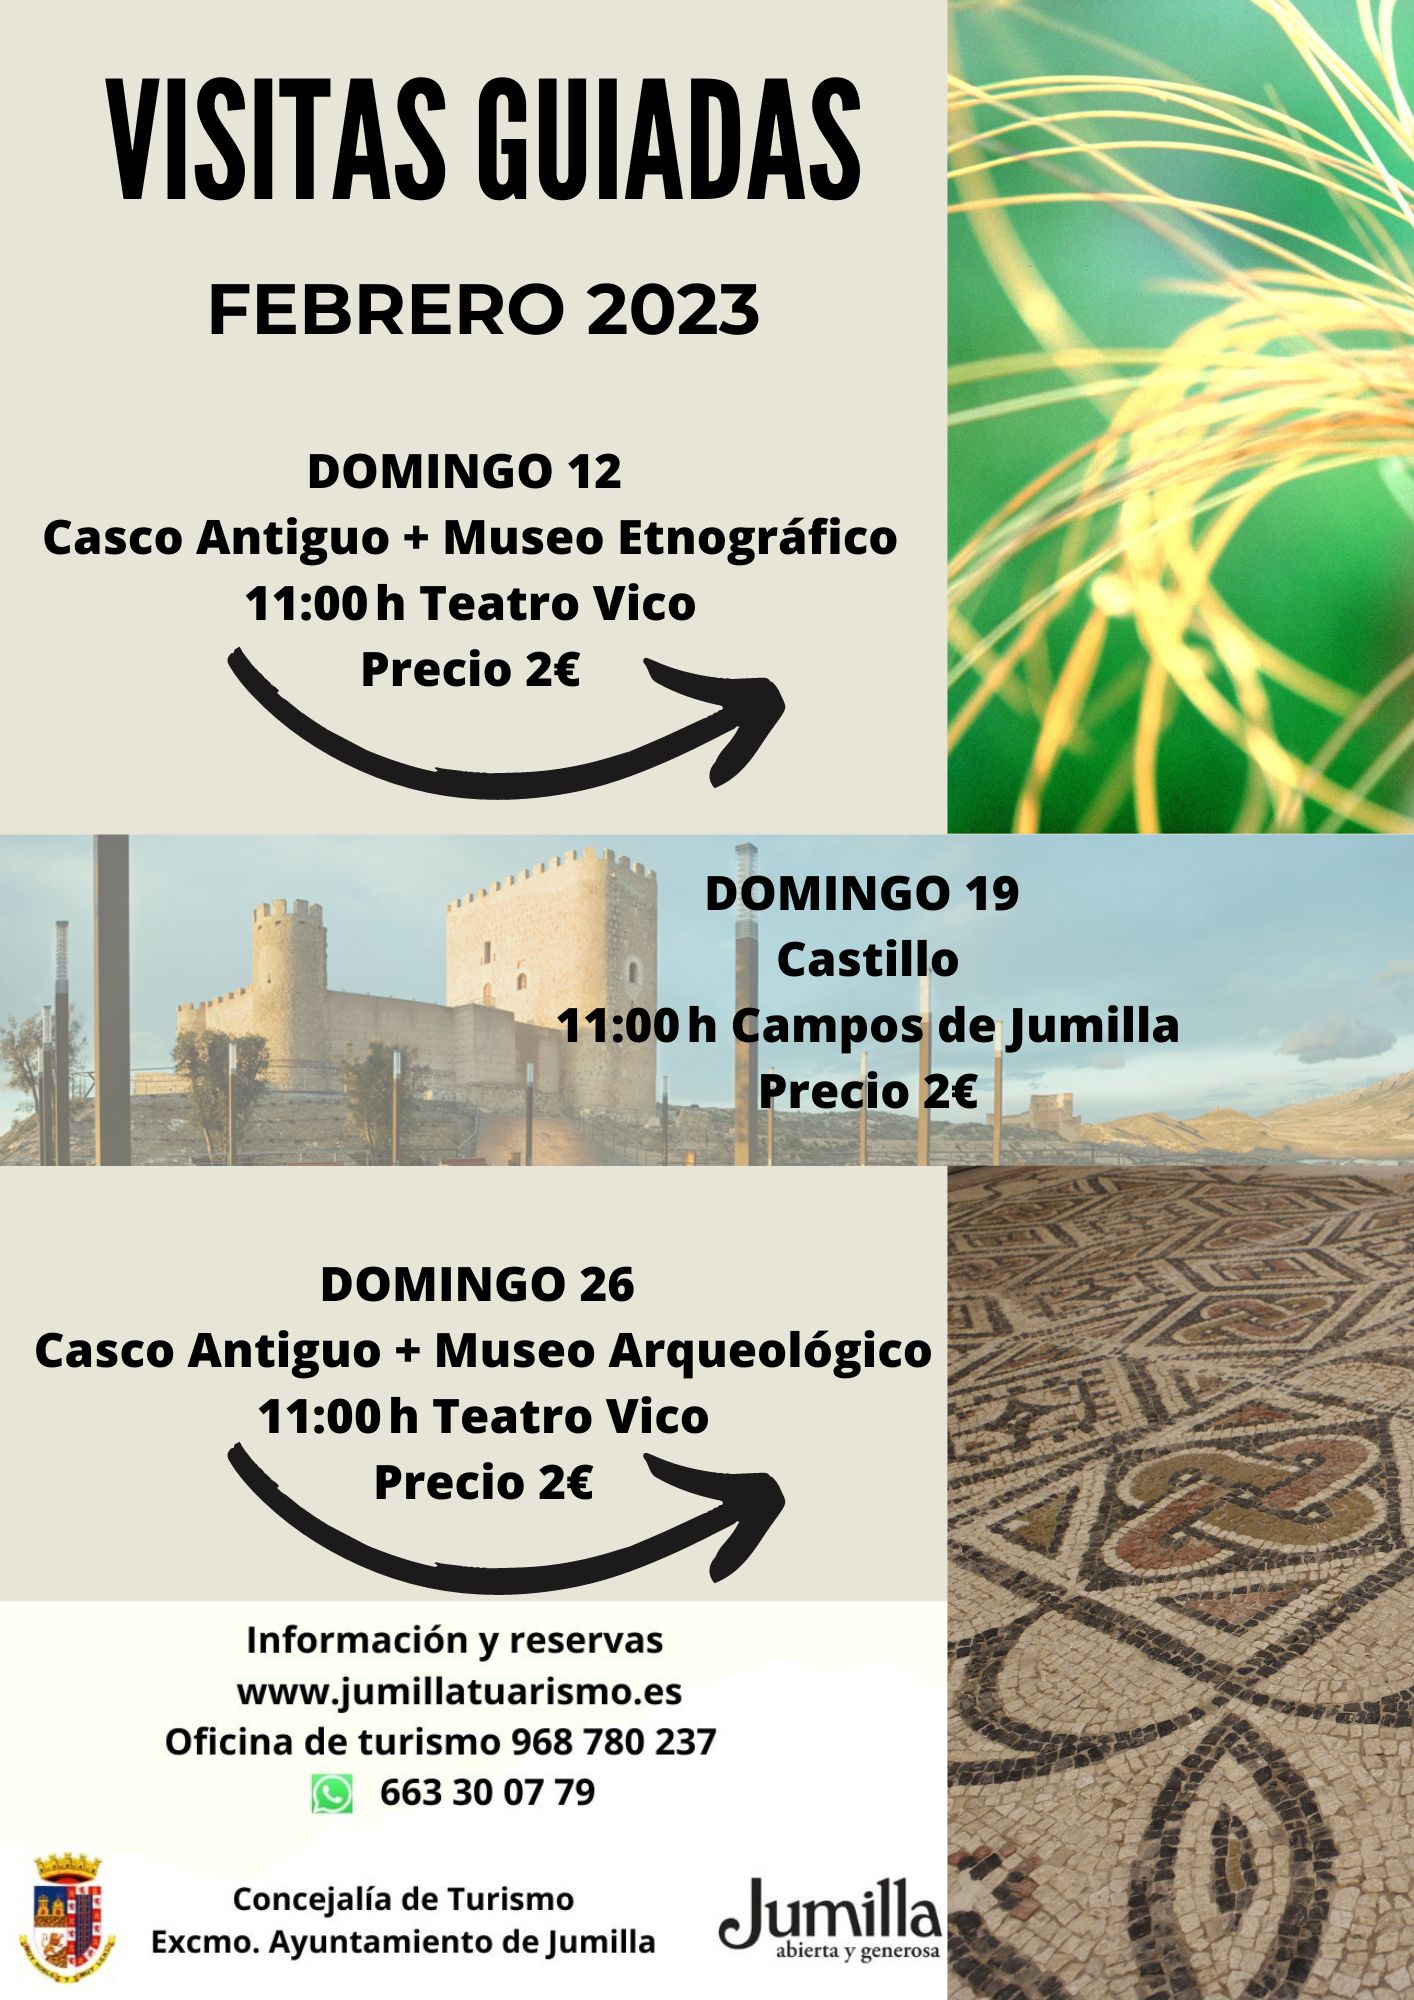 CASCO ANTIGUO + MUSEO ARQUEOLÓGICO